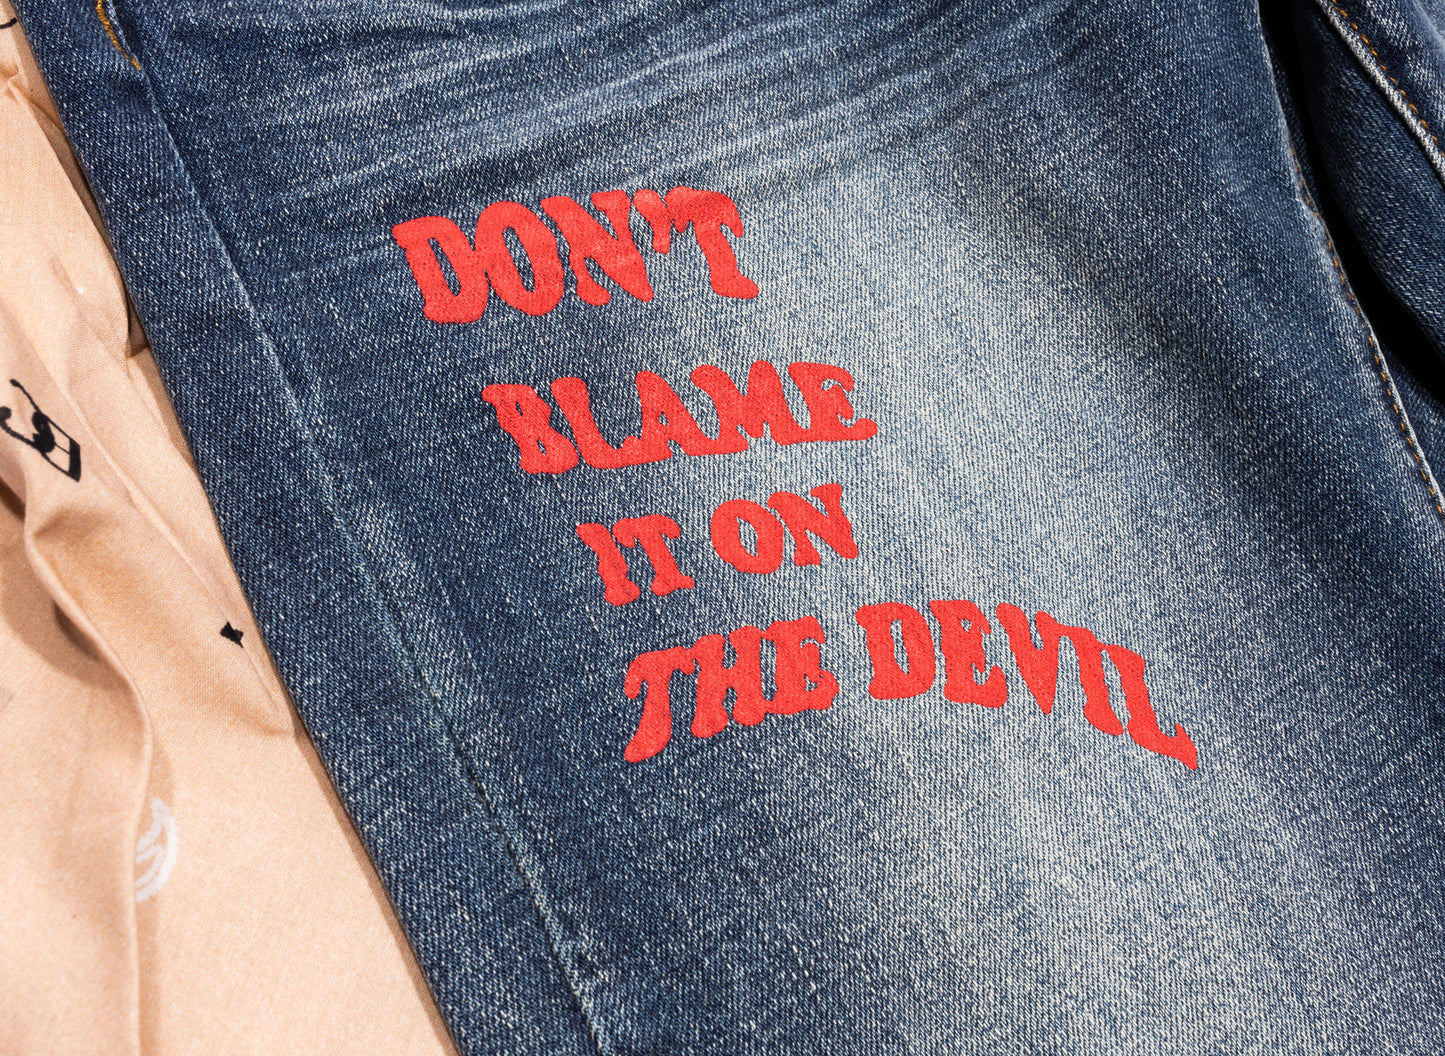 BLUECARATS The D'Evils Denim Jeans